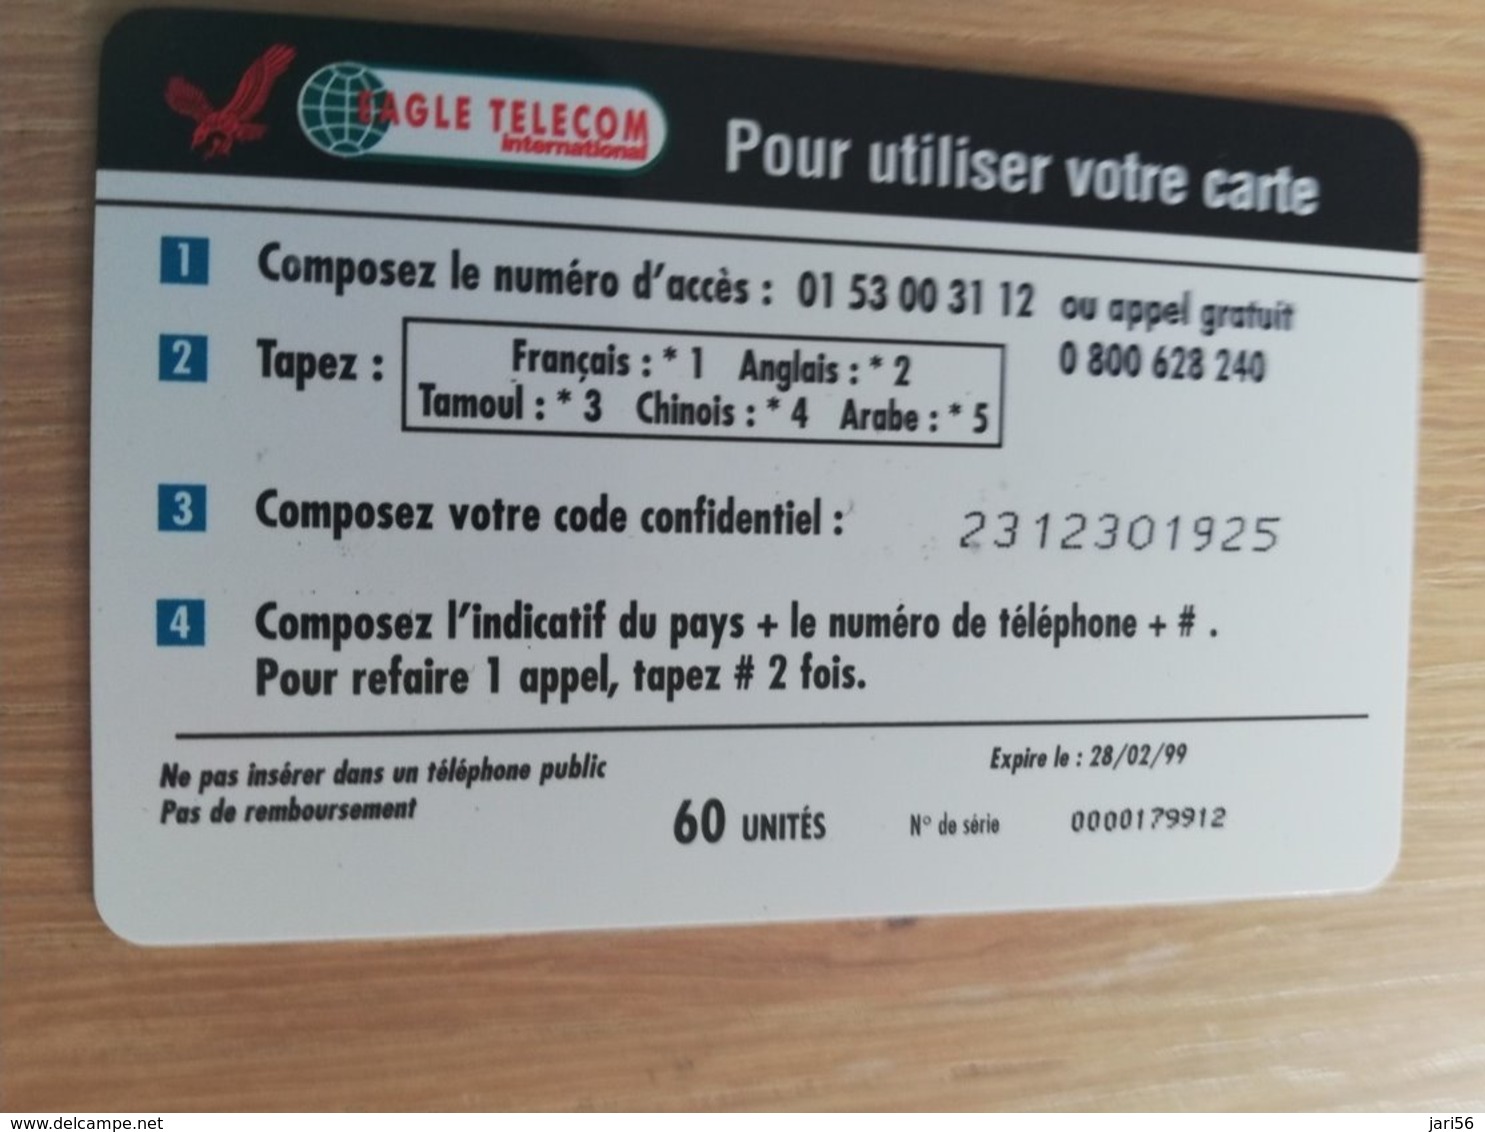 FRANCE/FRANKRIJK  EAGLE TELECOM 50FF  PREPAID  USED    ** 1499** - Mobicartes (GSM/SIM)